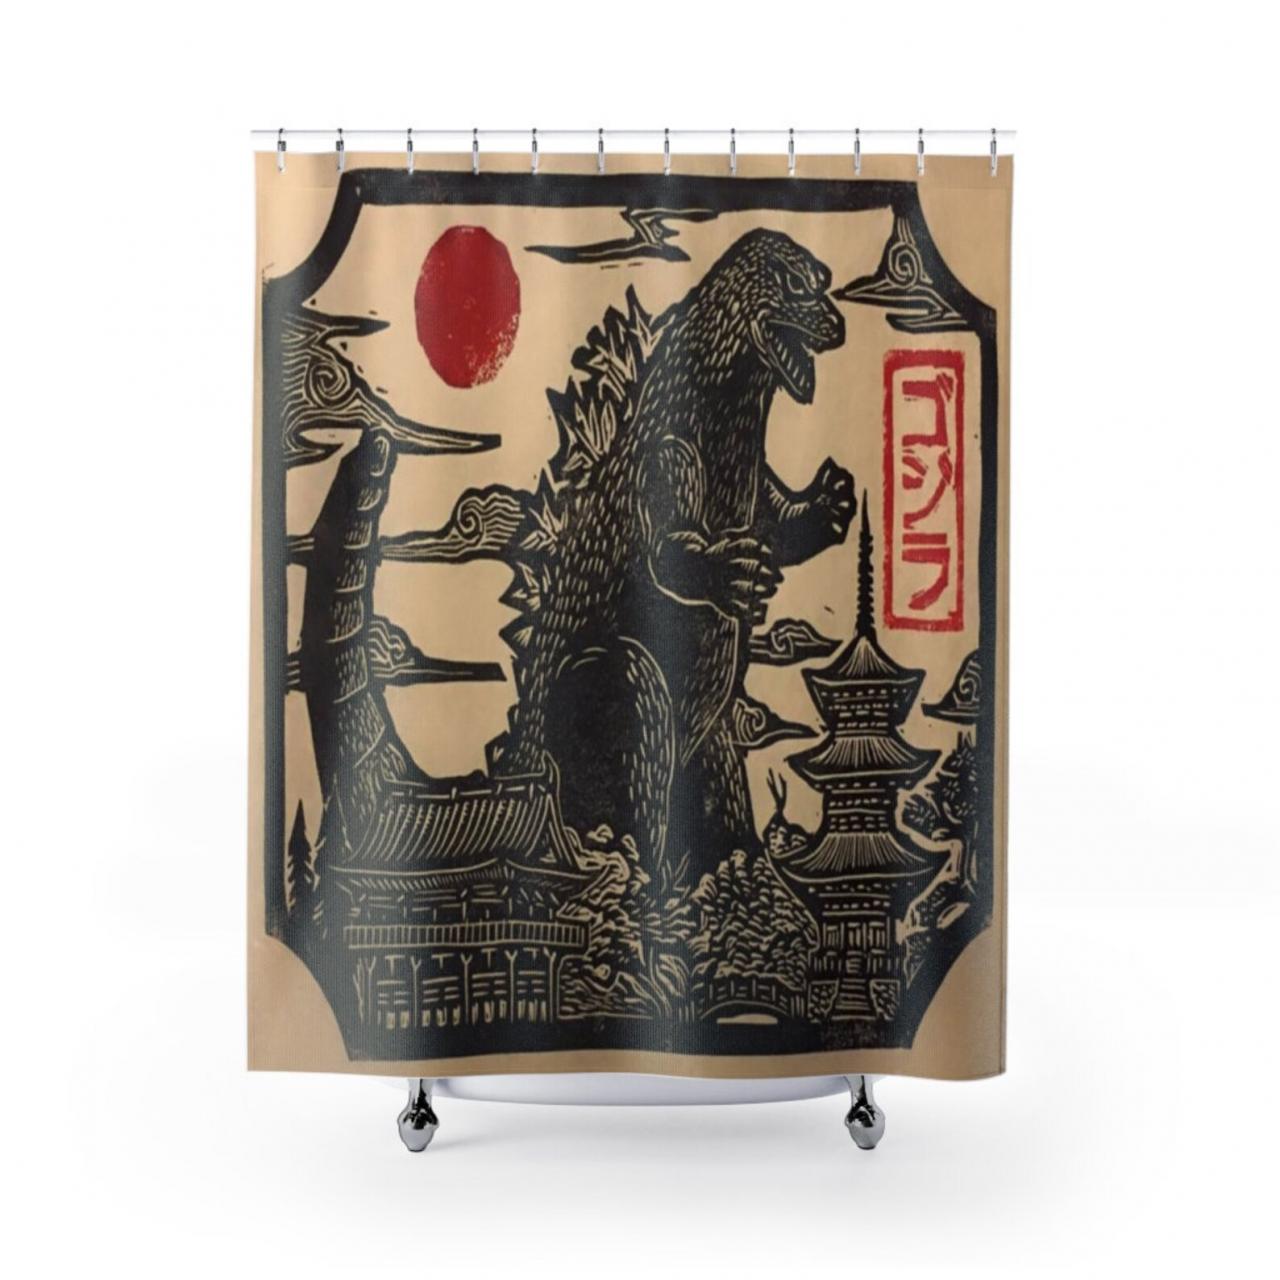 Japanese Shower Curtain Godzilla Bathroom Decor Funny Etsy